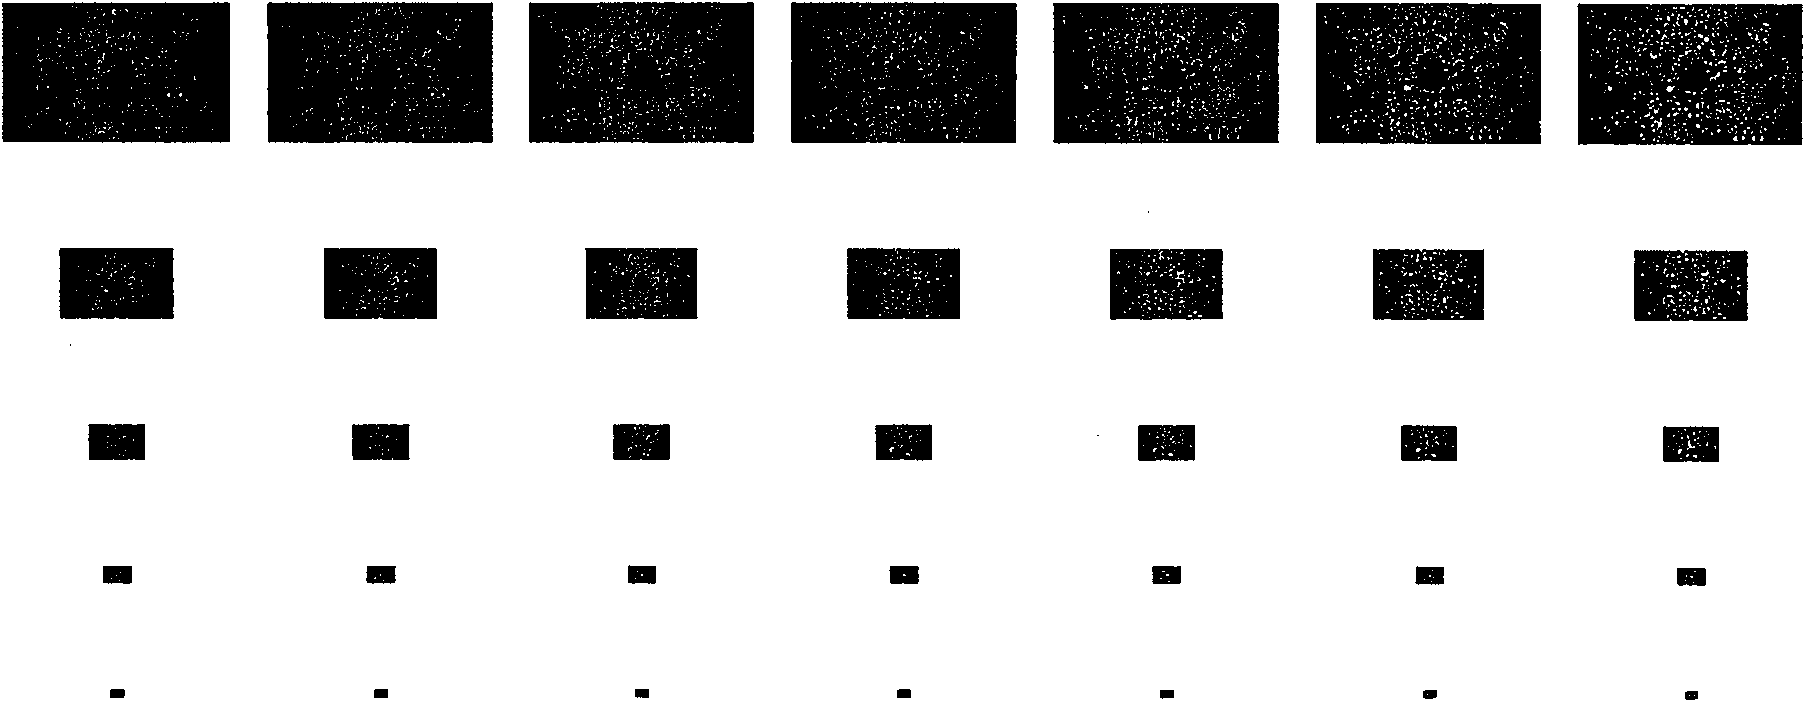 Sub-pixel characteristic point detection-based image matching method